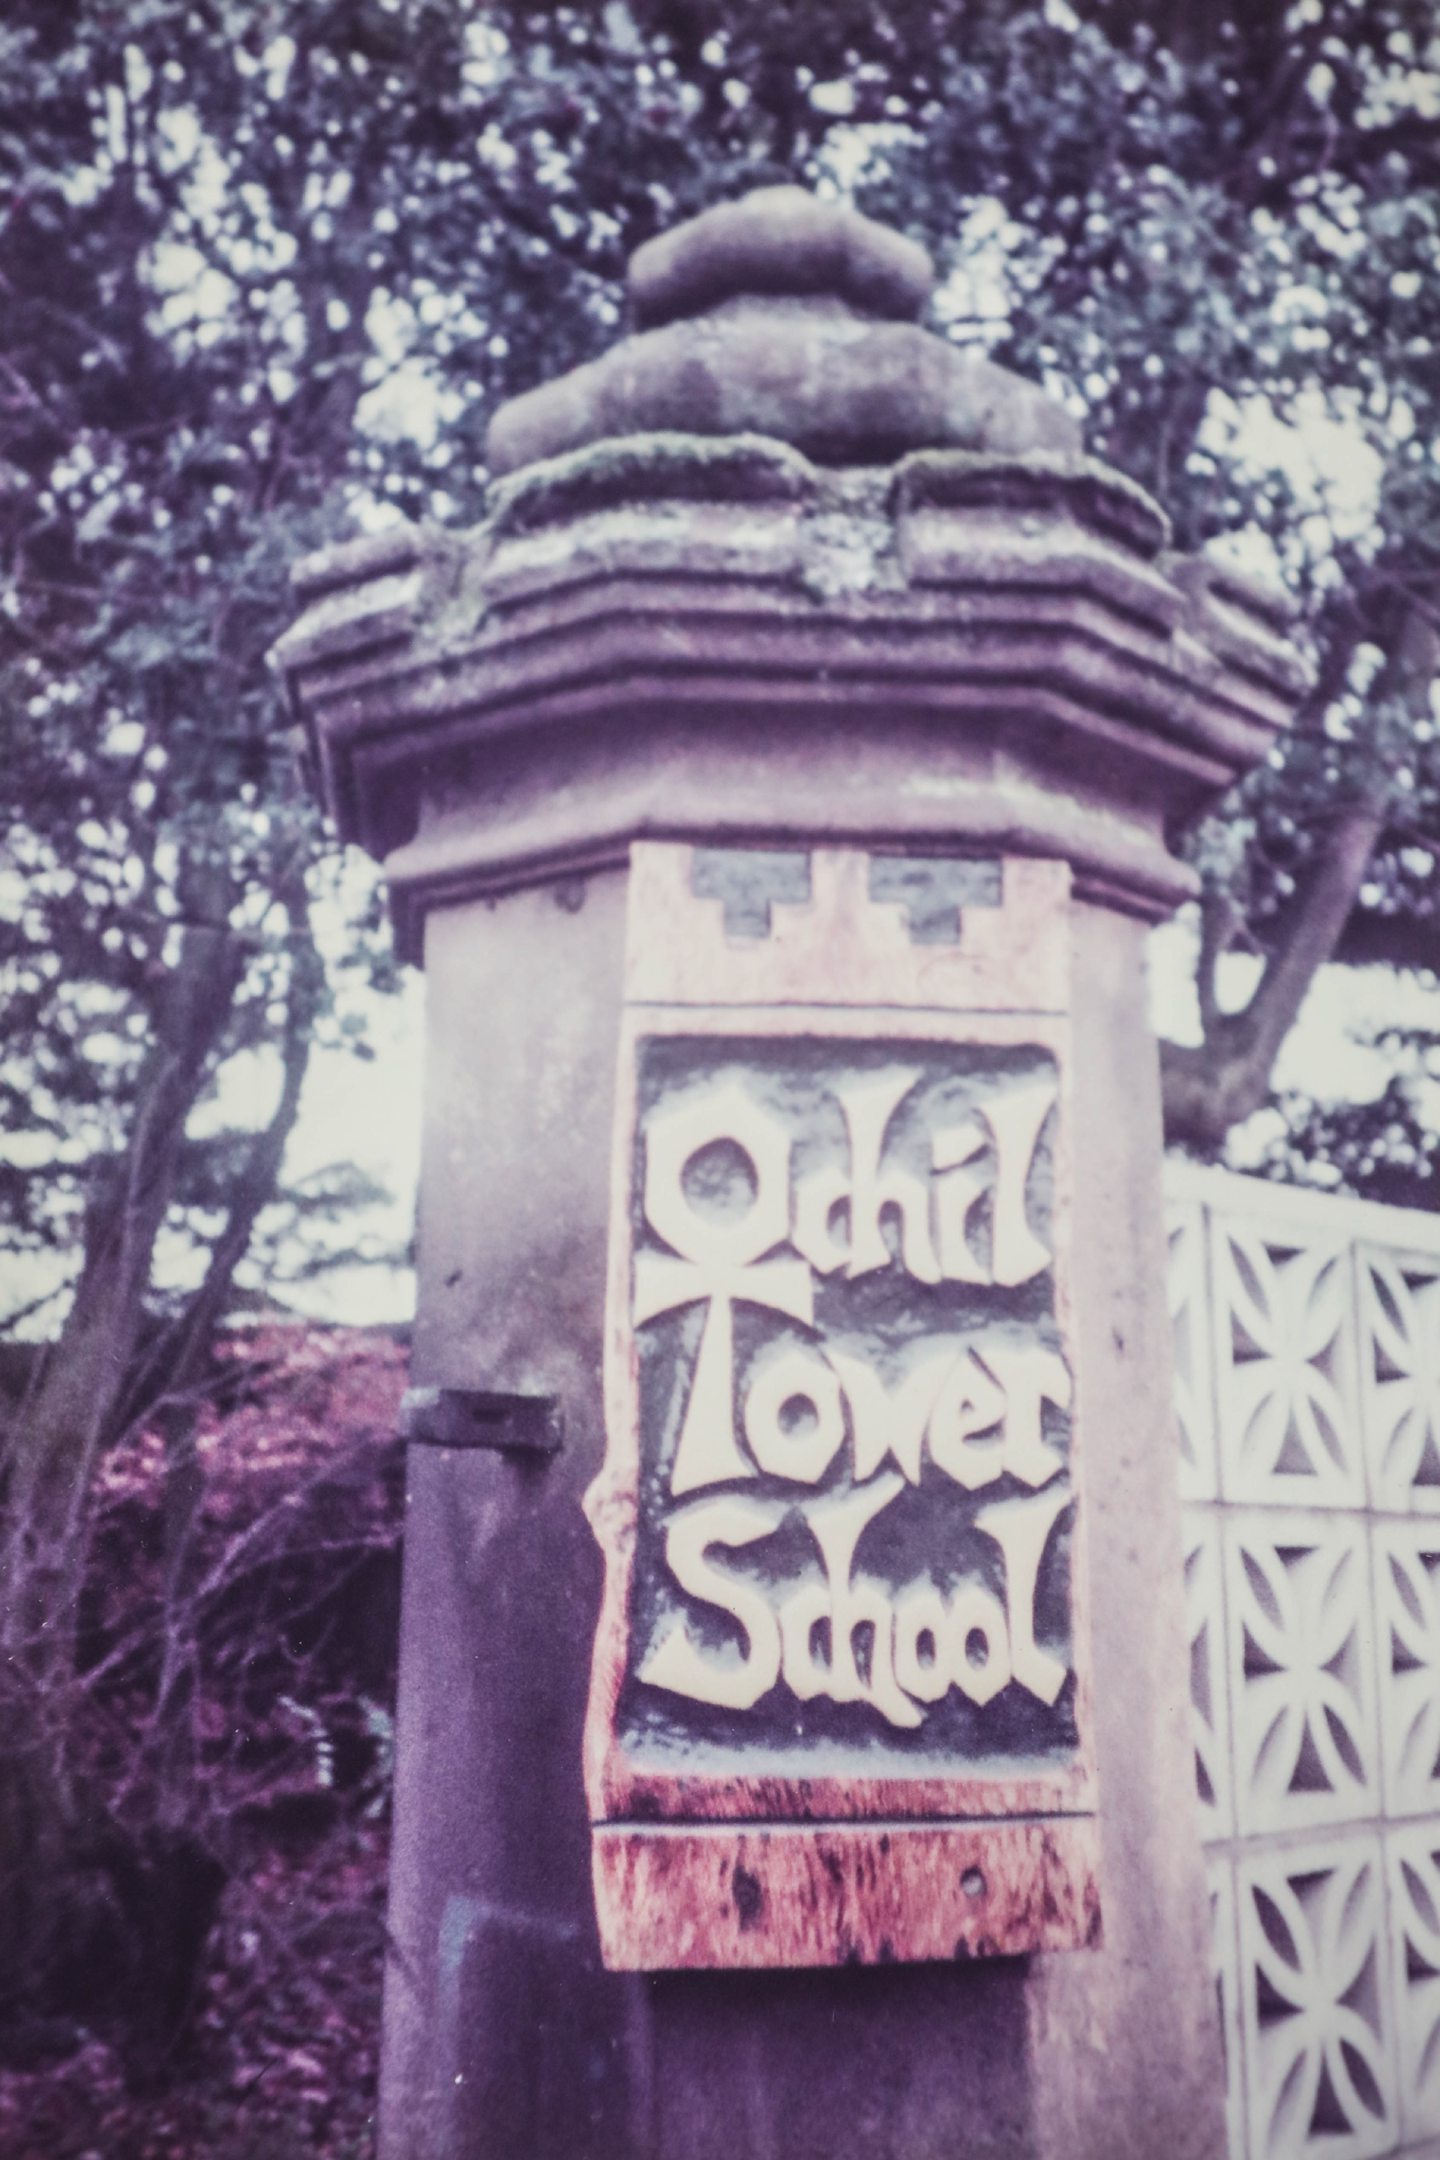 The gateway to Ochil Tower School.